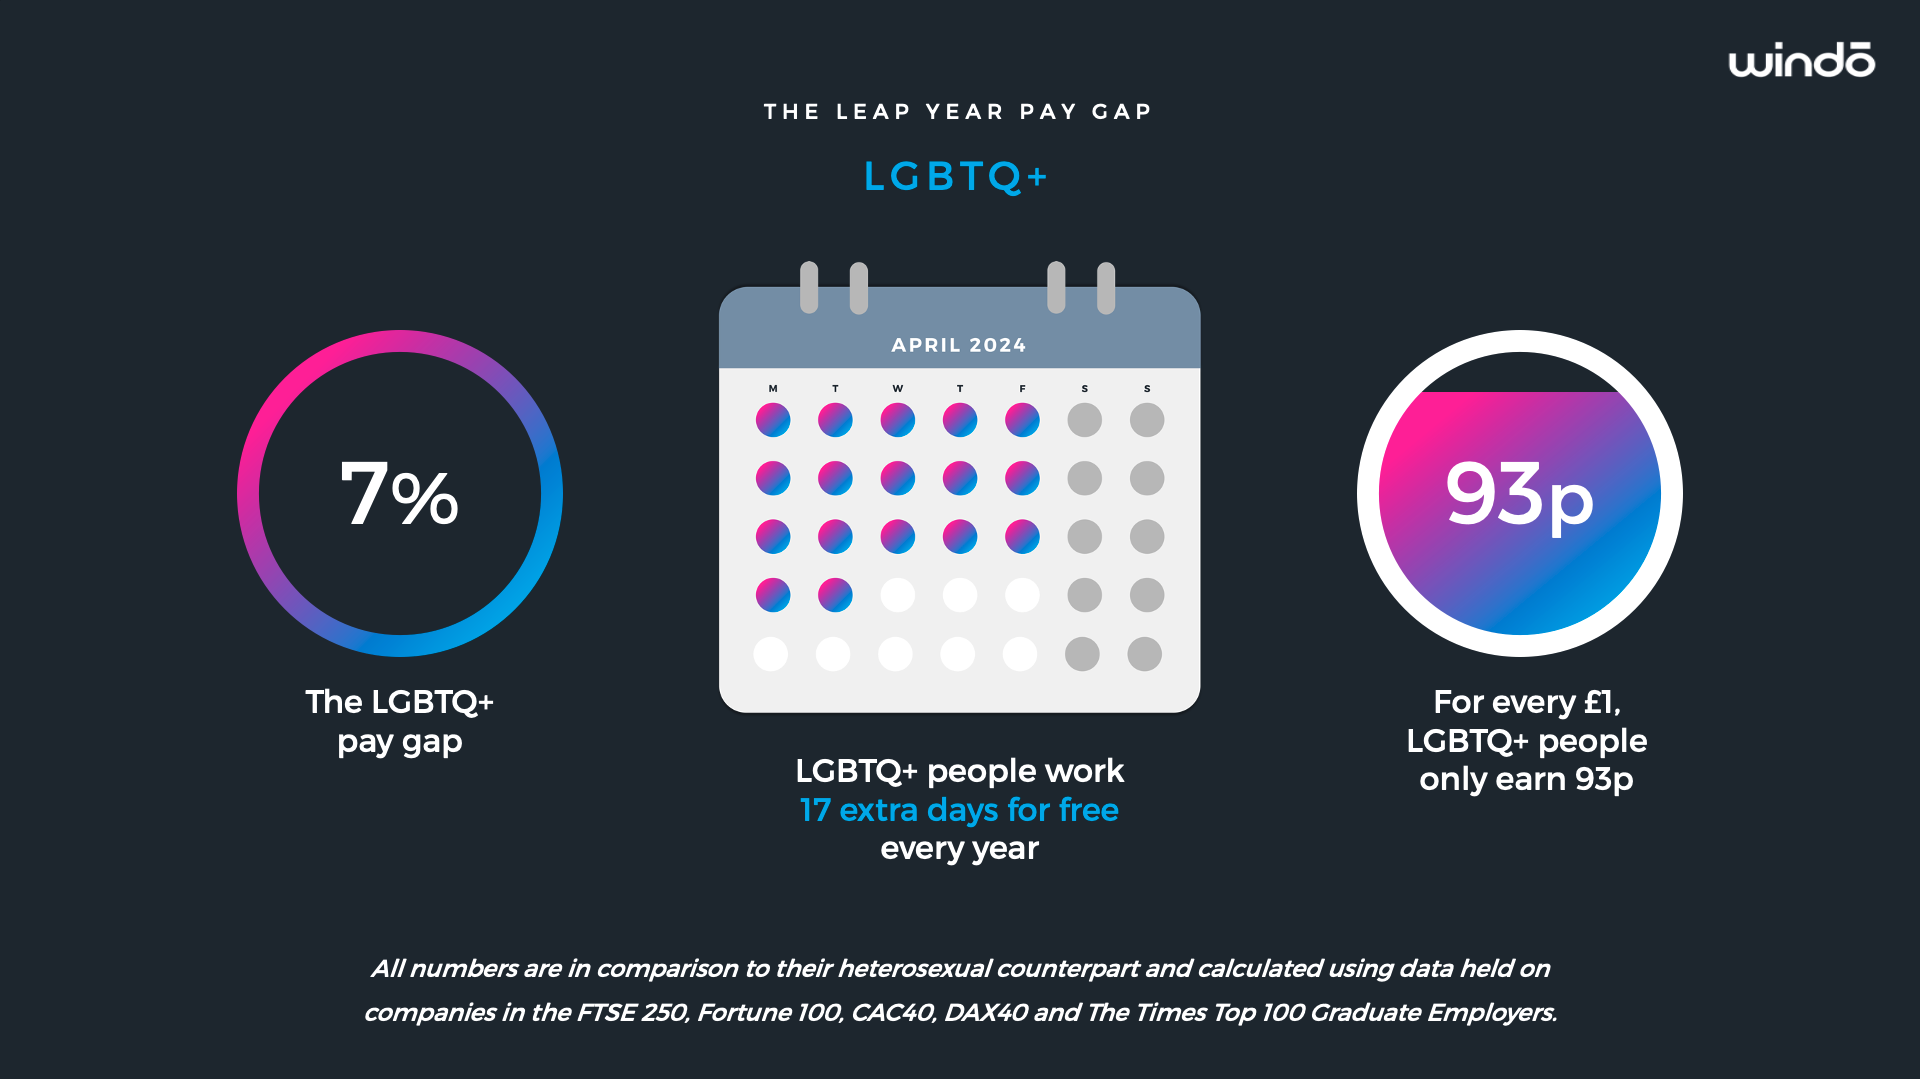 Windo_The_Leap_Year_LGBTQ_Pay_Gap_2024